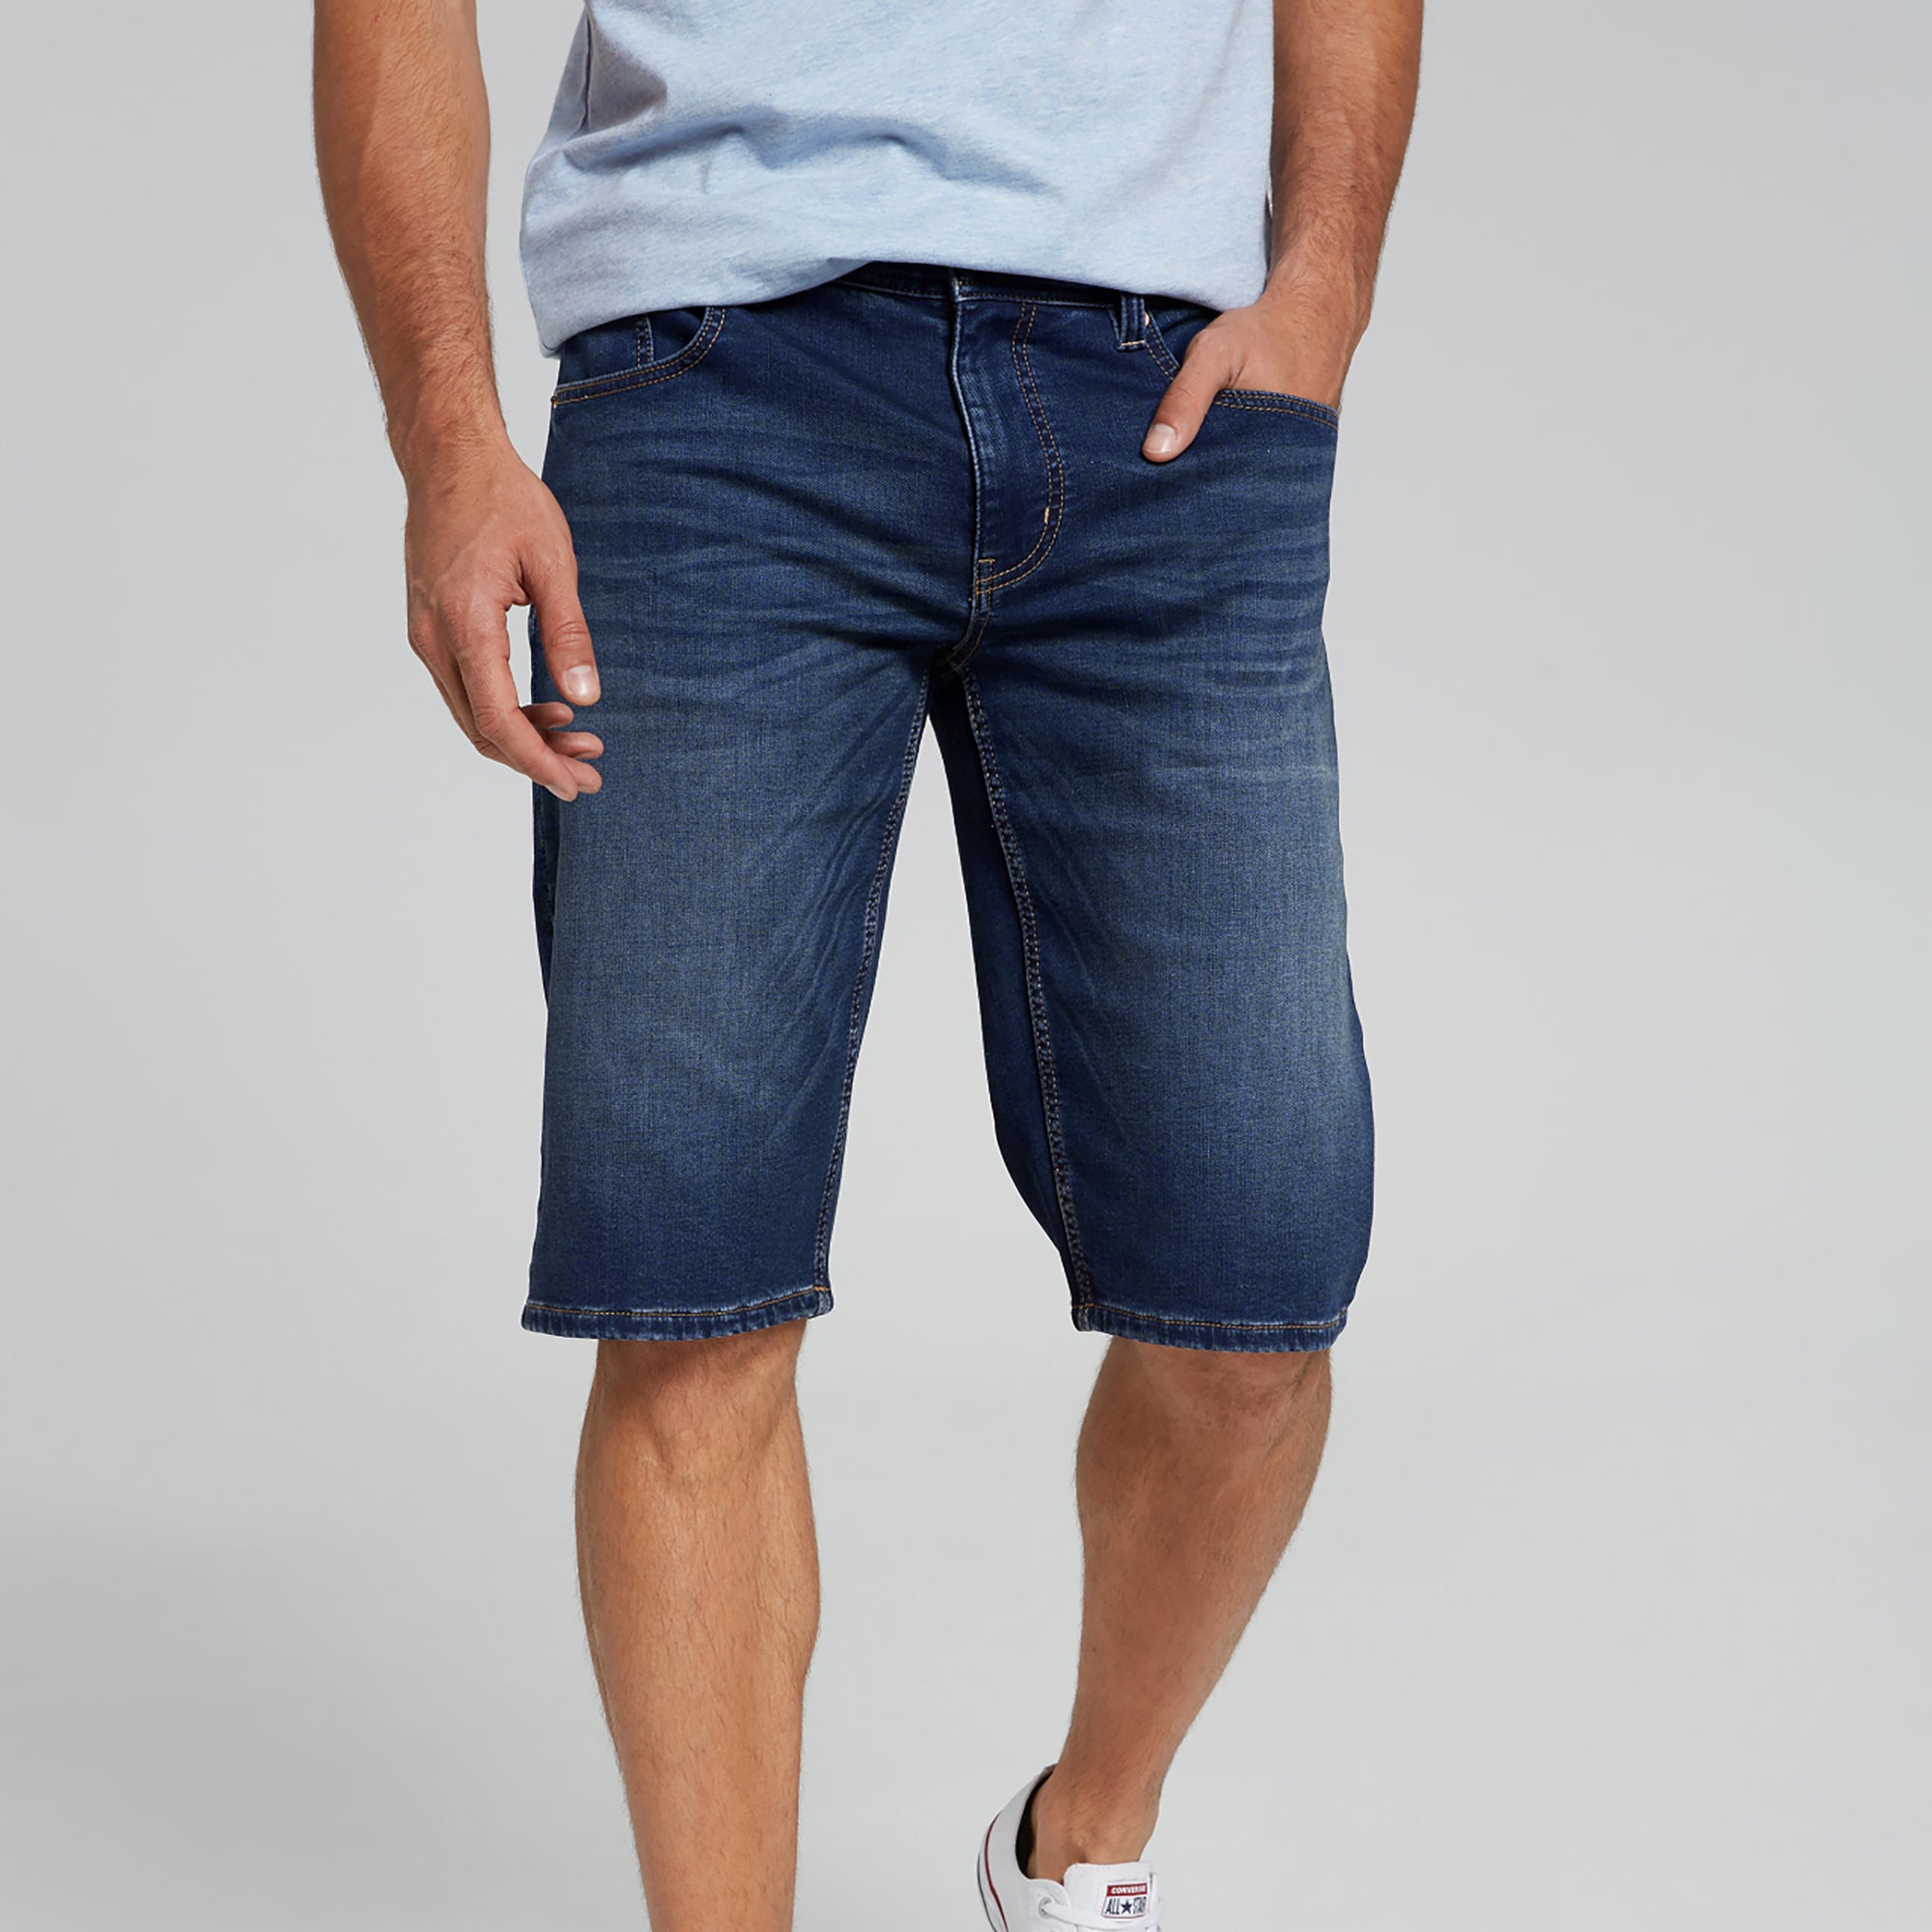 Tom Tailor Jeans Short For Men Dark Blue Faded Sk0357